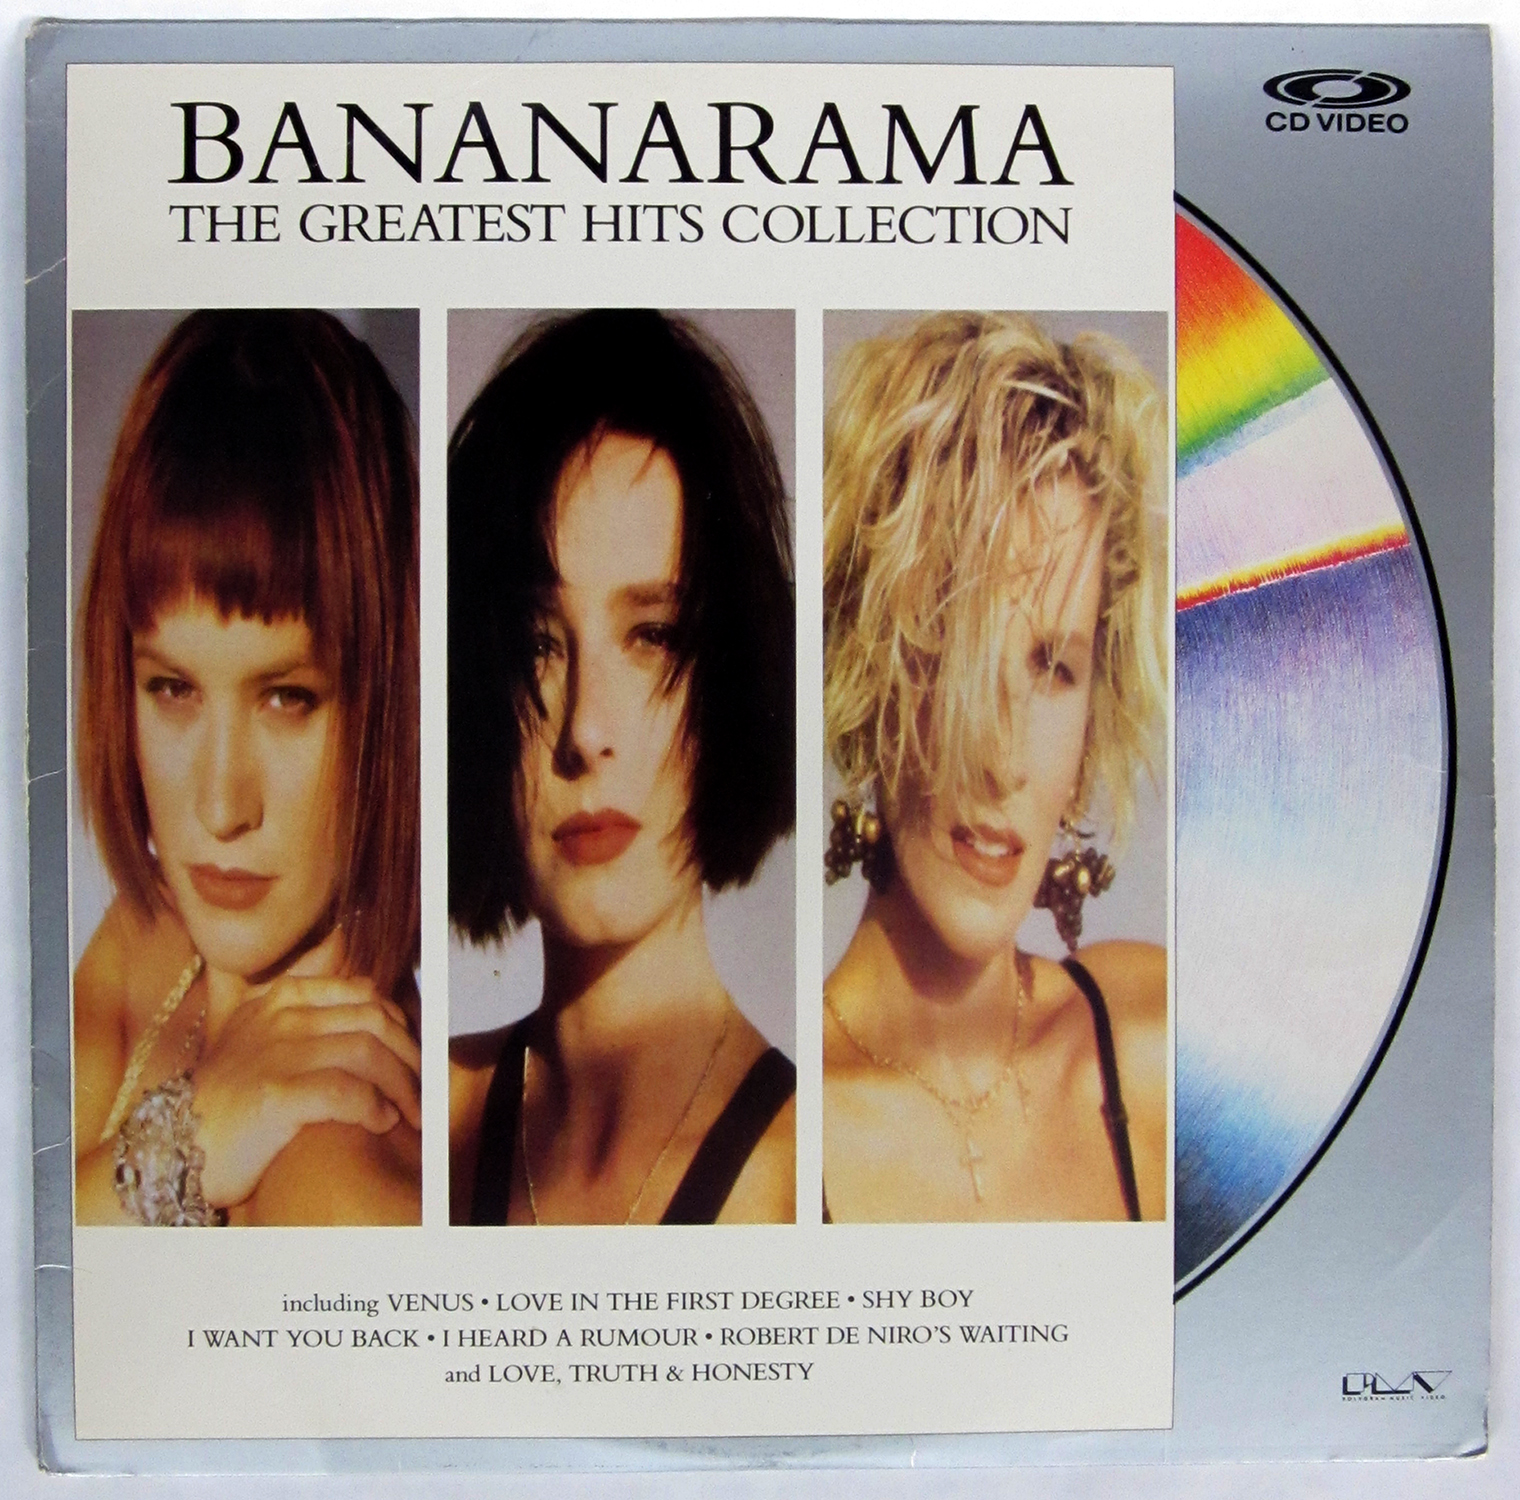 Greatest hits collection. Bananarama 2007. Bananarama Runner обложка. Bananarama Venus обложка. Bananarama "Viva, CD".